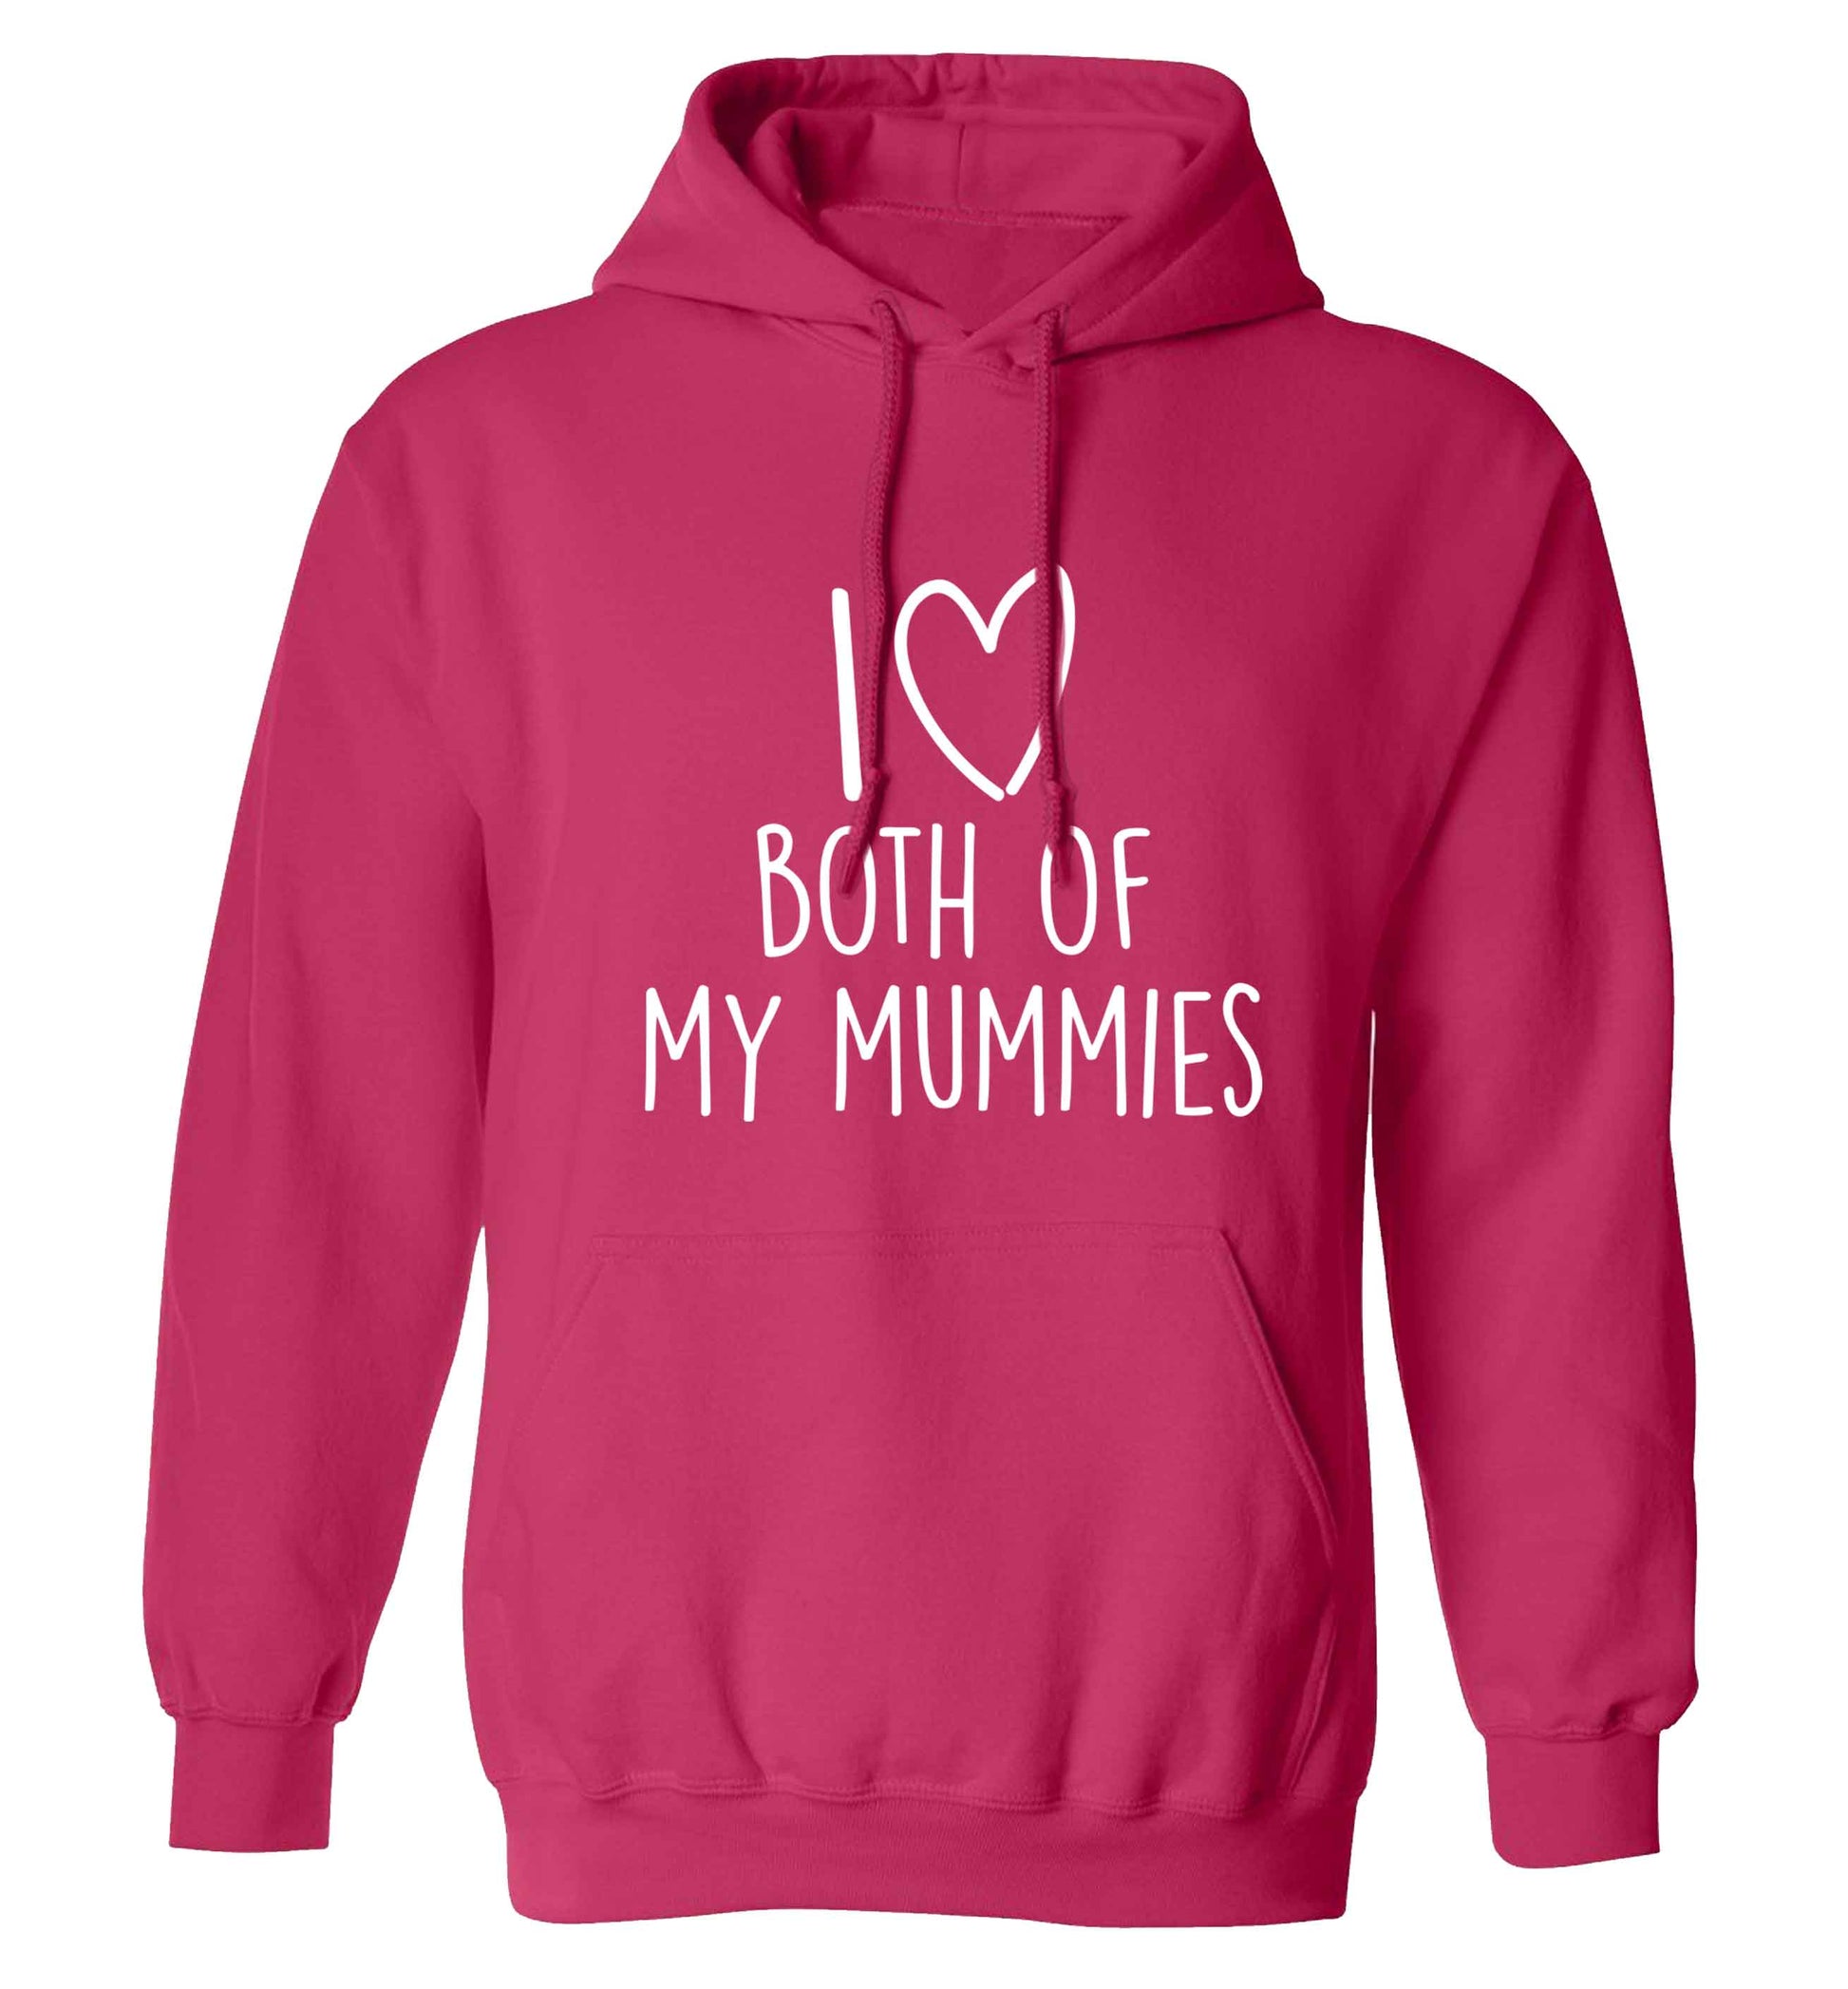 I love both of my mummies adults unisex pink hoodie 2XL